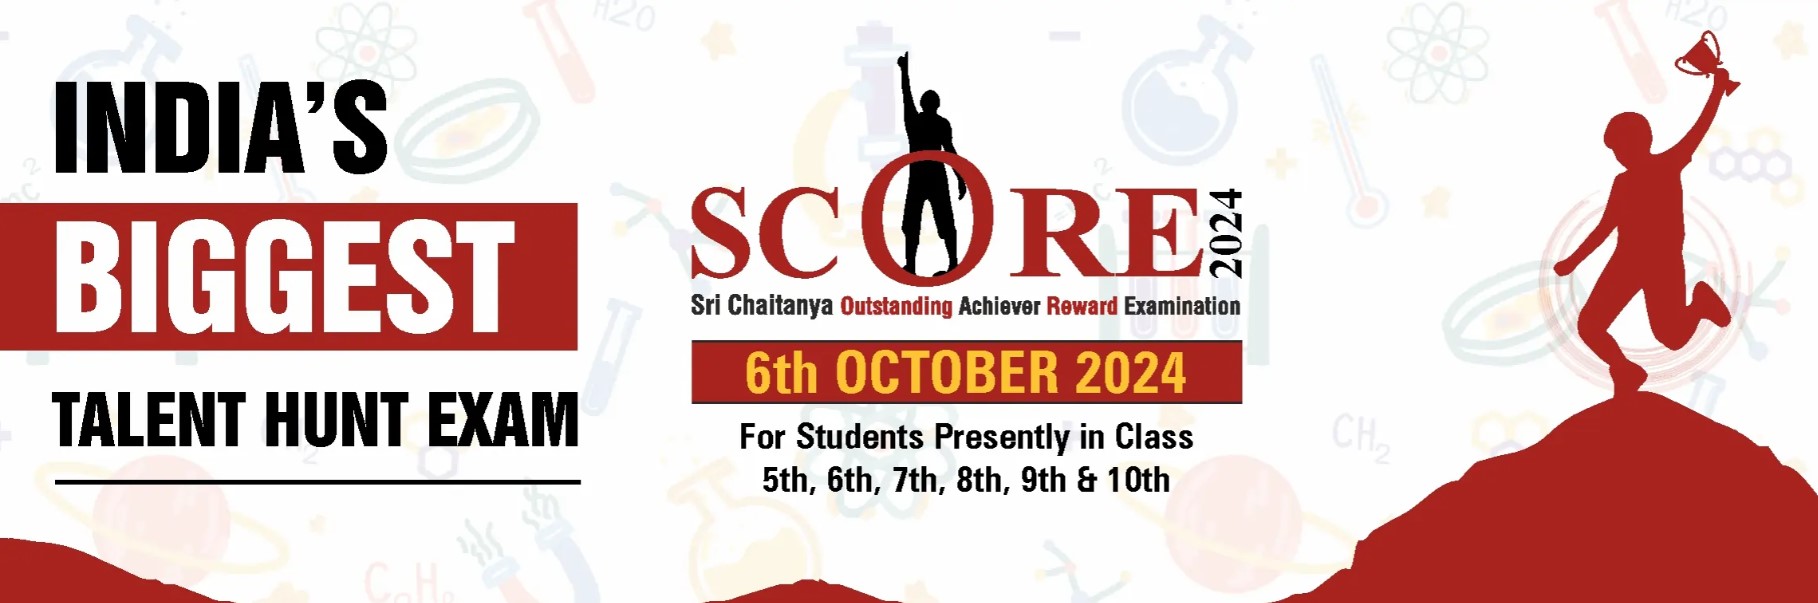 Sri Chaitanya SCORE Scholarship Test Registration 2024 - Check Registration Process, Event Dates, Fees, Last Date